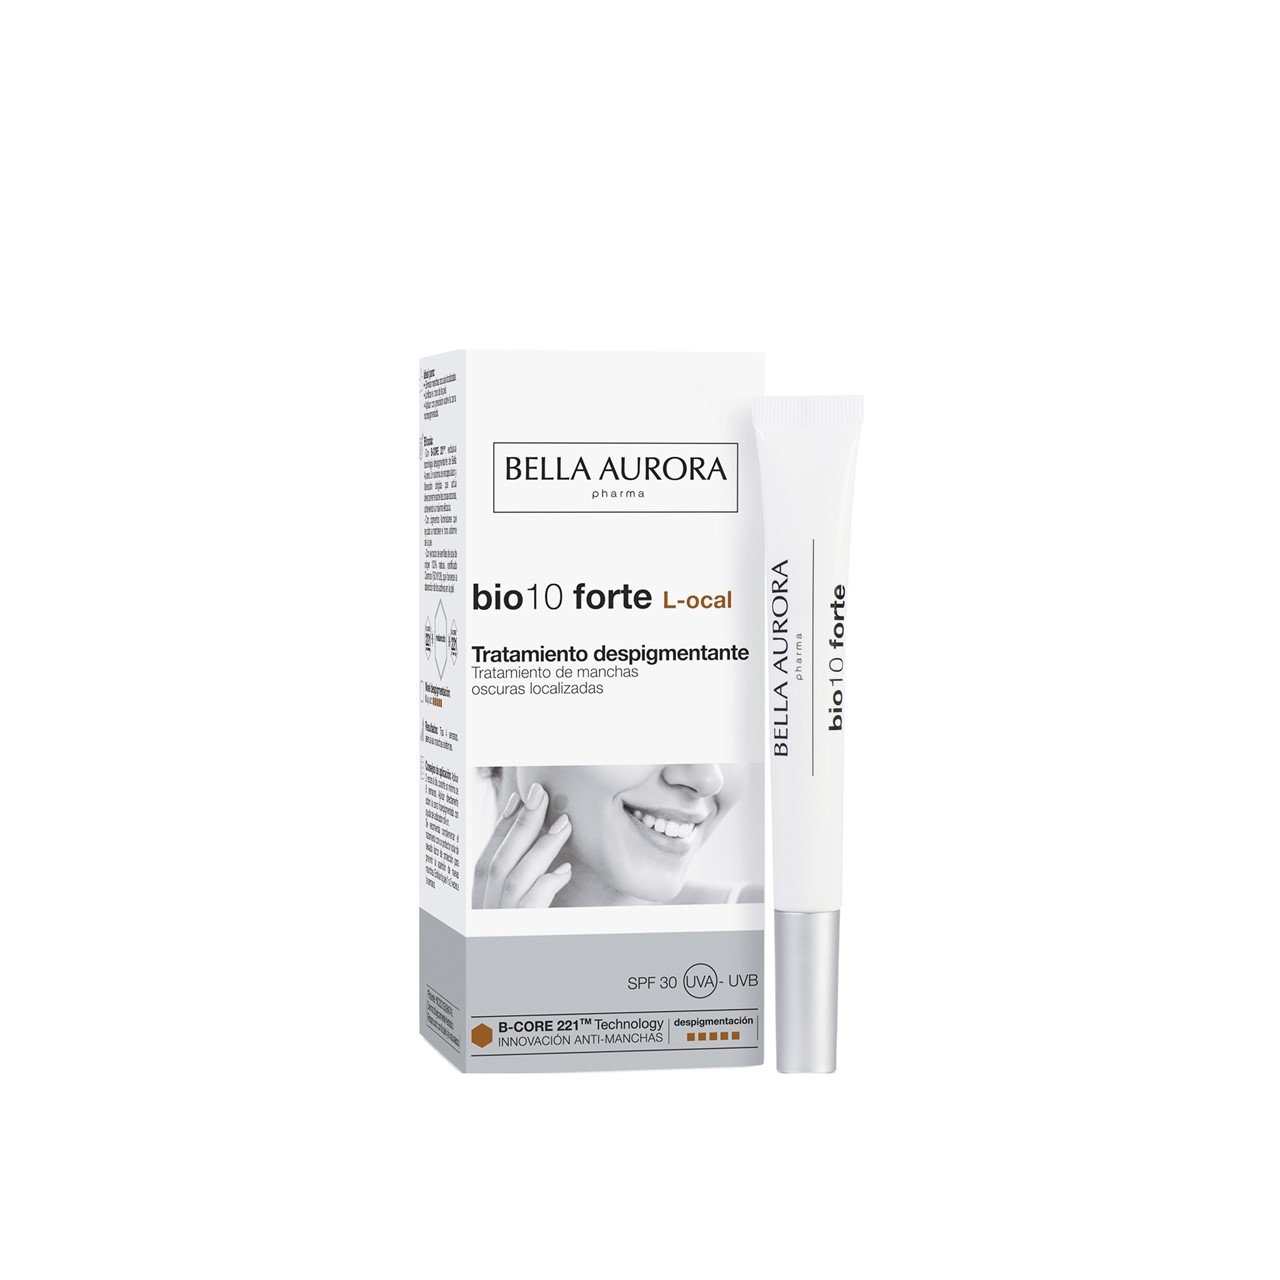 Bella Aurora Bio10 Forte L-ocal Depigmenting Treatment 9ml (0.30 fl oz)